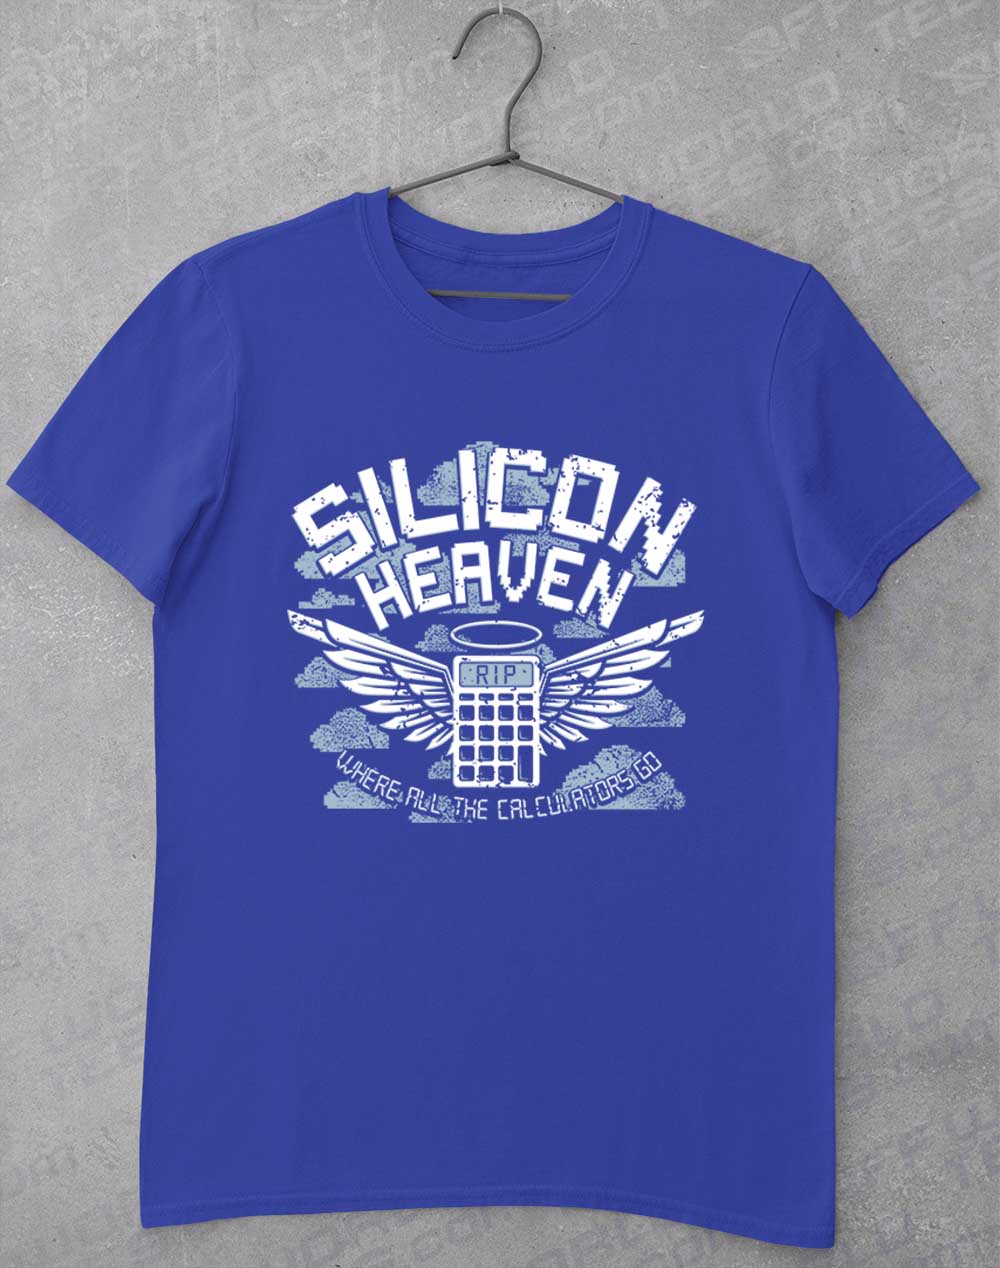 Royal - Silicon Heaven T-Shirt